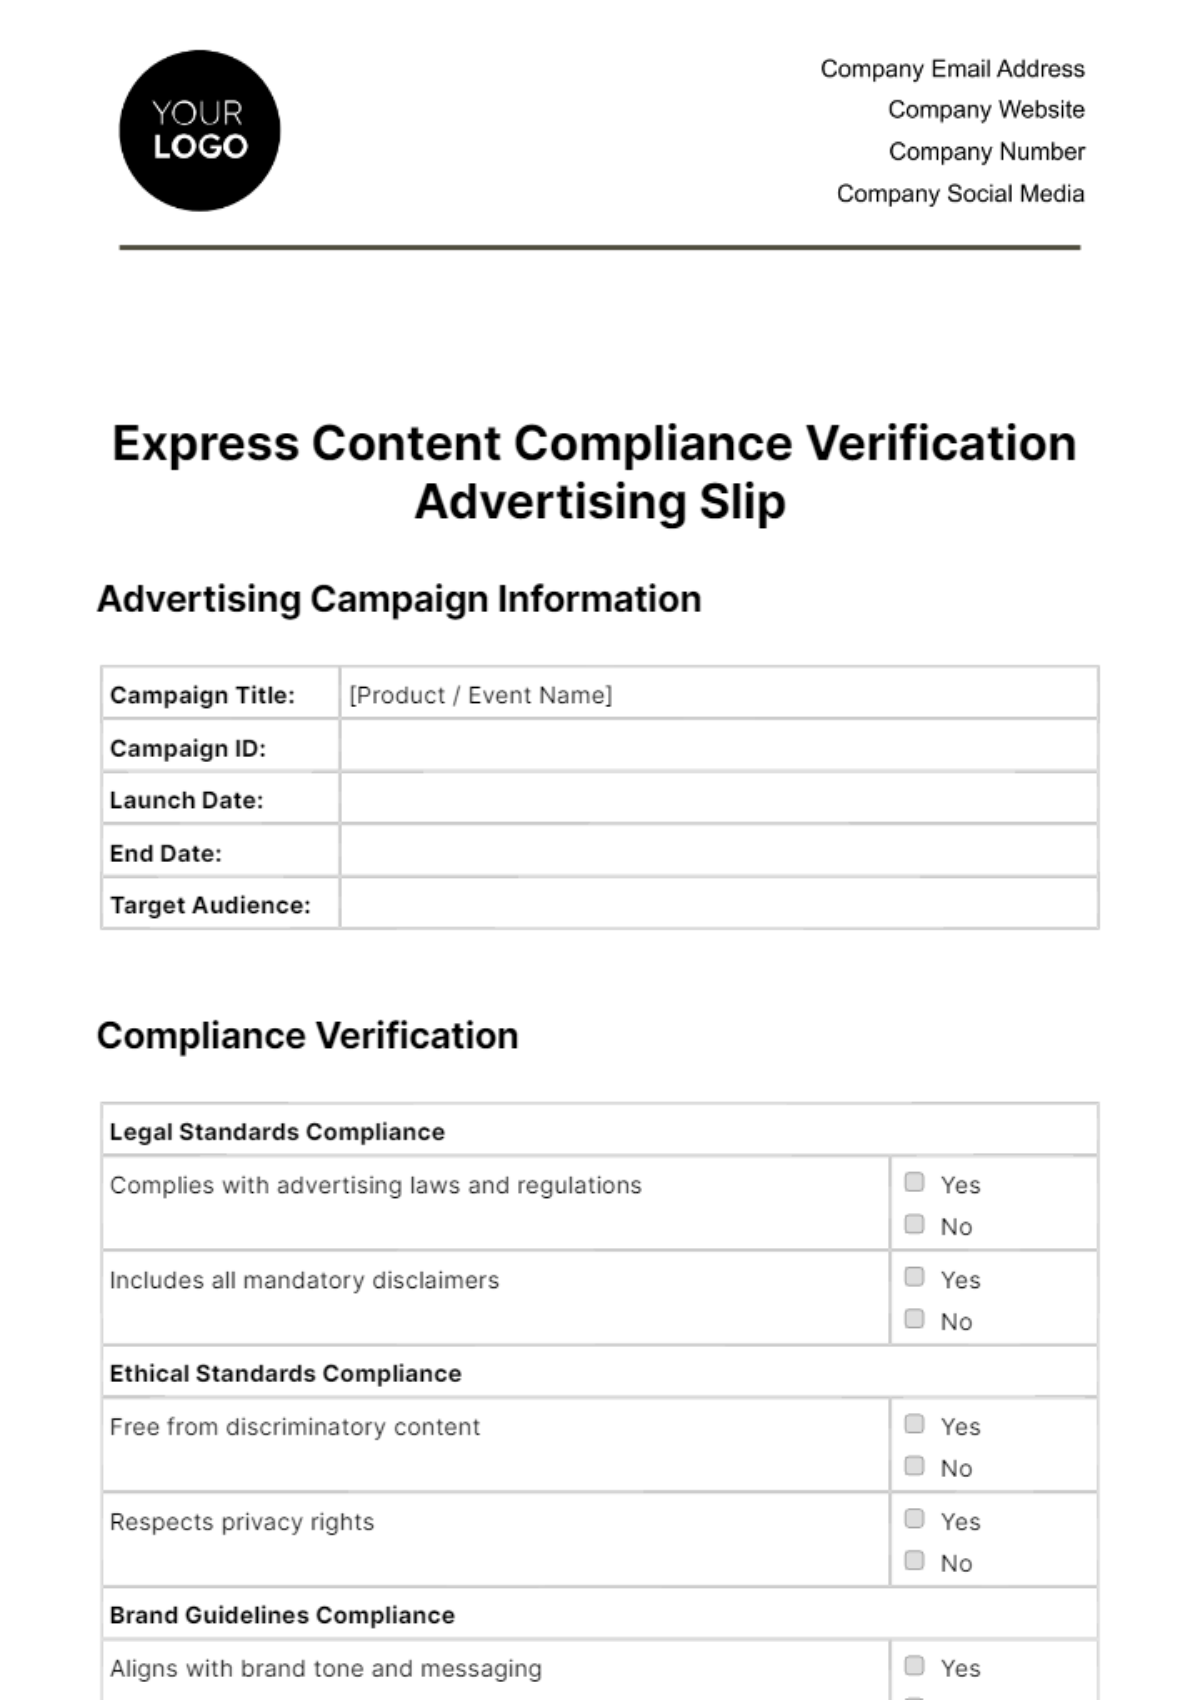 Express Content Compliance Verification Advertising Slip Template